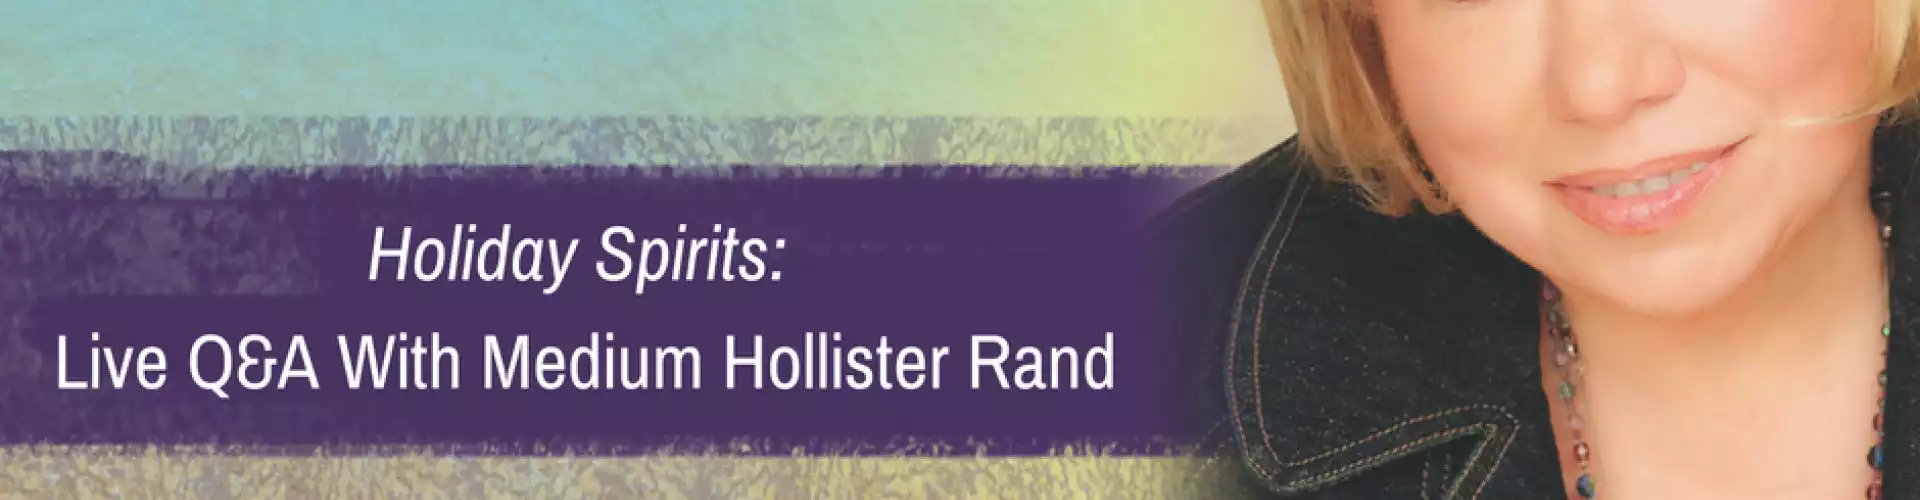 Holiday Spirits: Live Q&A with Medium Hollister Rand 